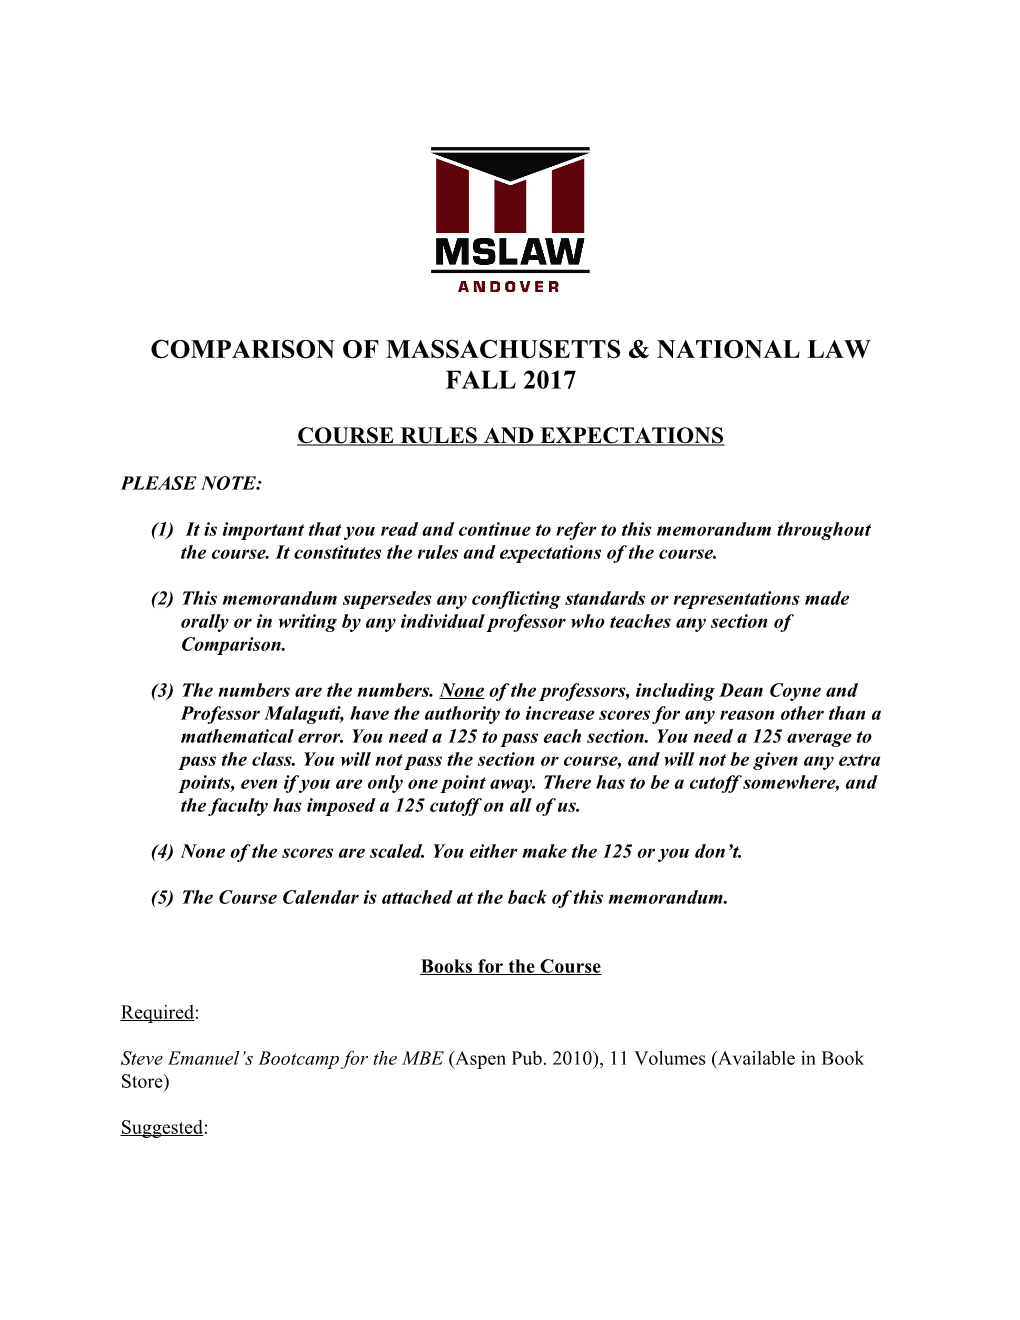 Comparison of Massachusetts & National Law